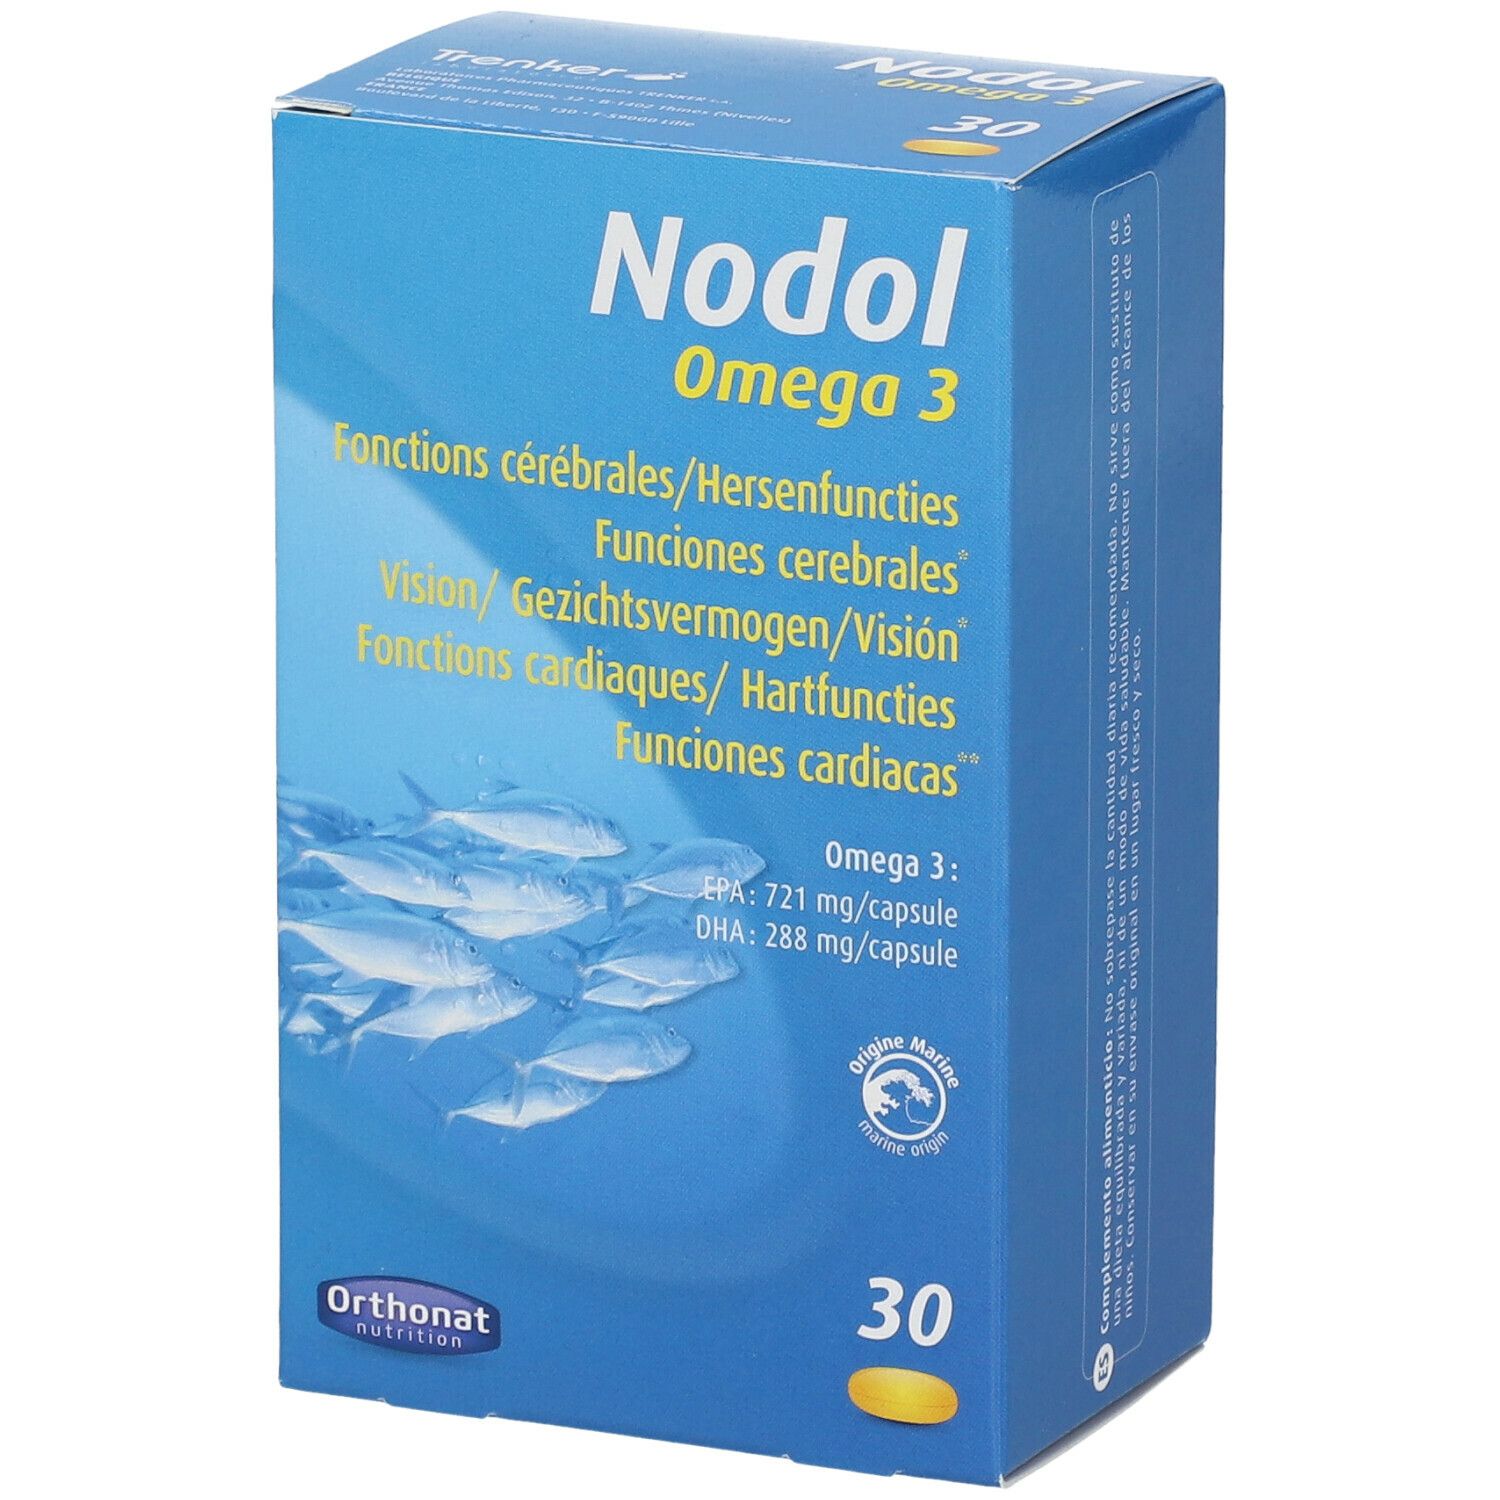 Image of Nodol Omega 3